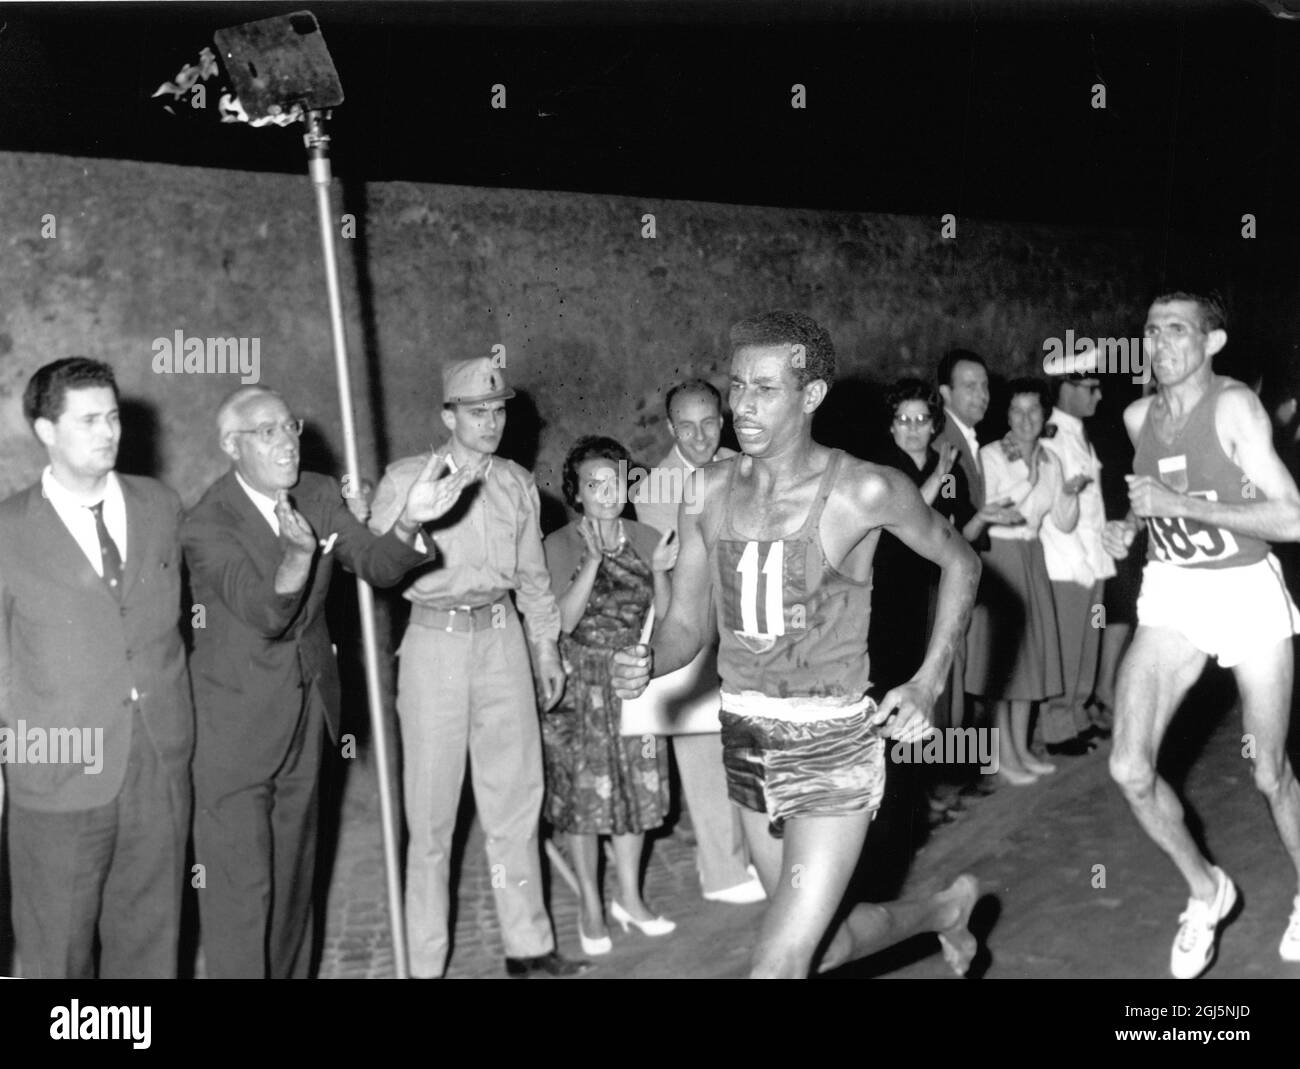 Abebe Bikila winning the Olympic marathon in Rome. 1960 Stock Photo